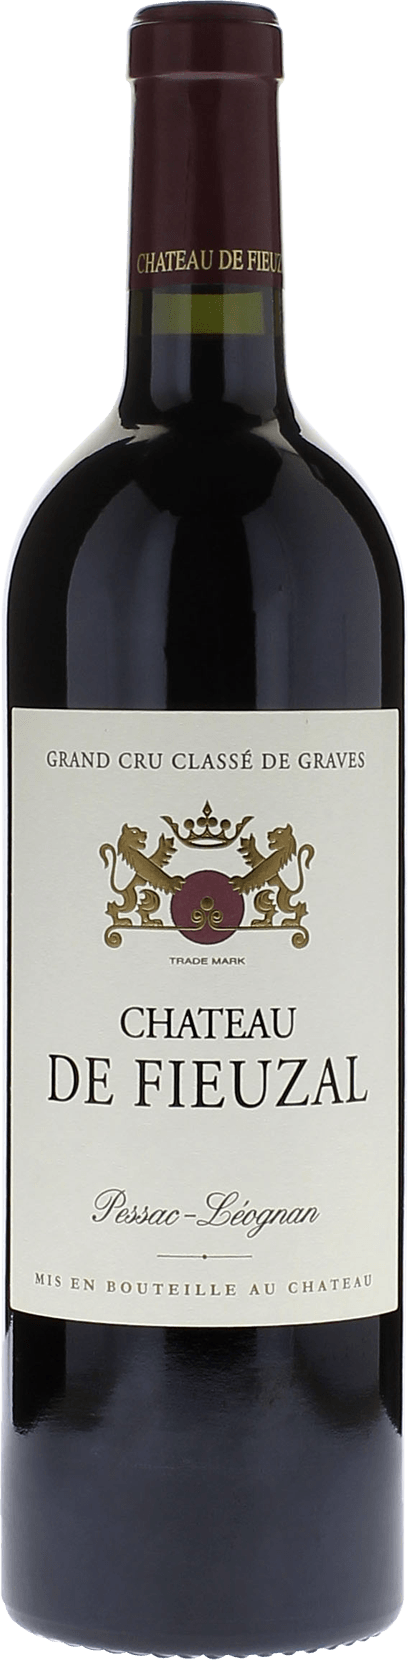 Fieuzal rouge 1998 cru class Pessac-Lognan, Bordeaux rouge